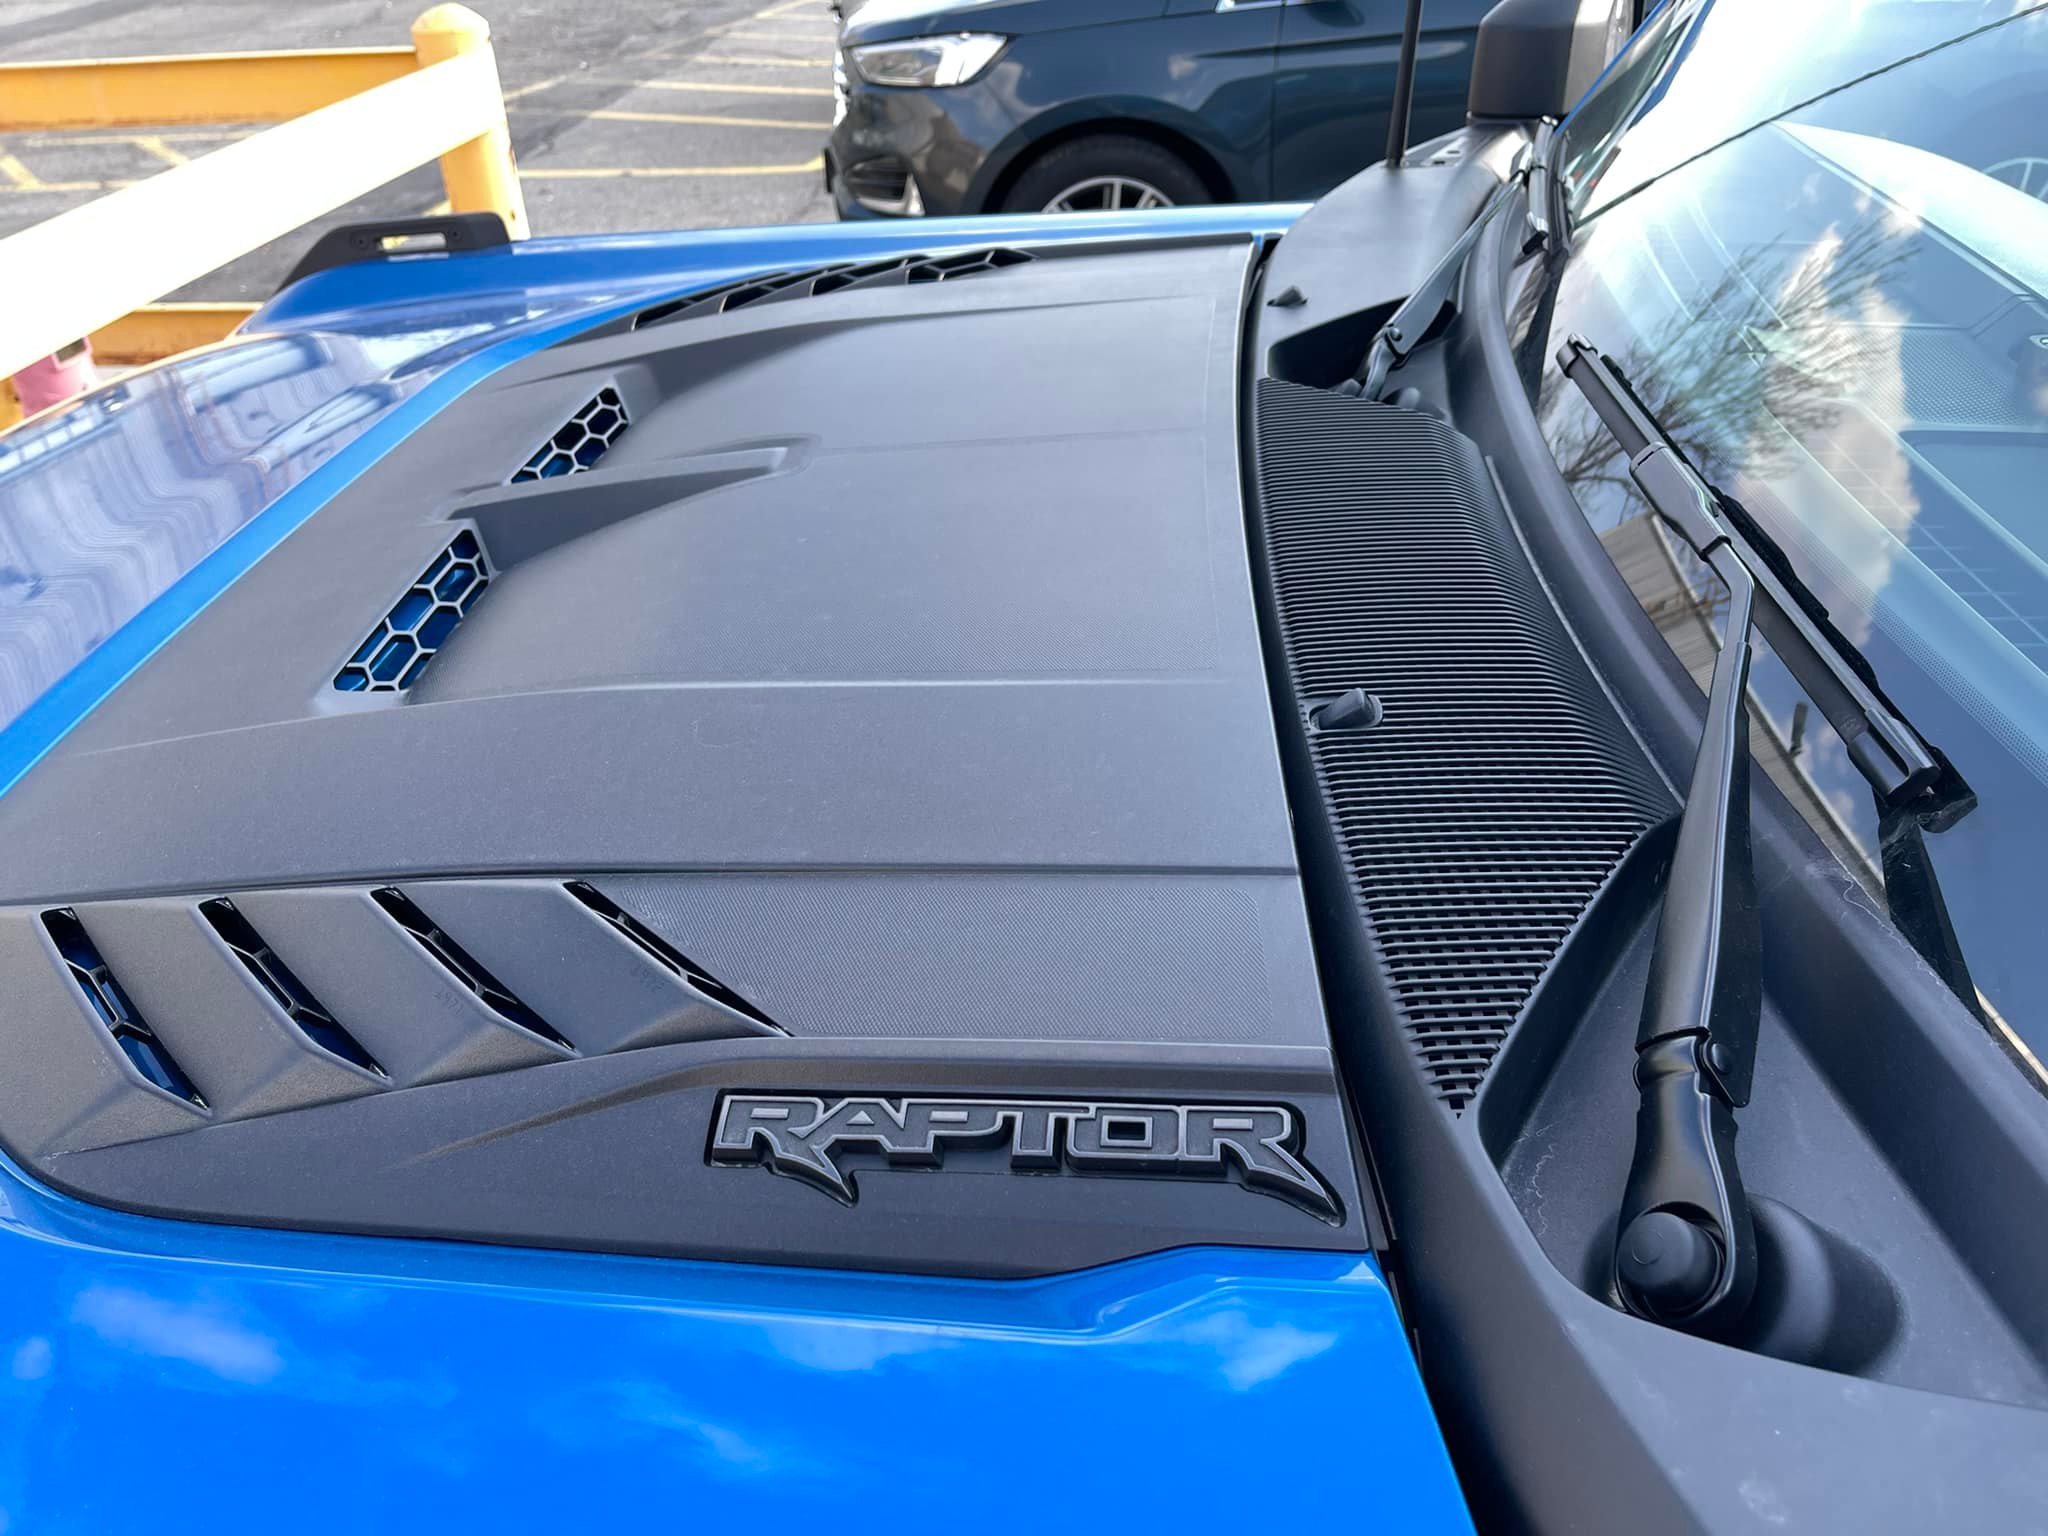 Velocity Blue Bronco Raptor with interior photos and engine exhaust video sound 3.jpg